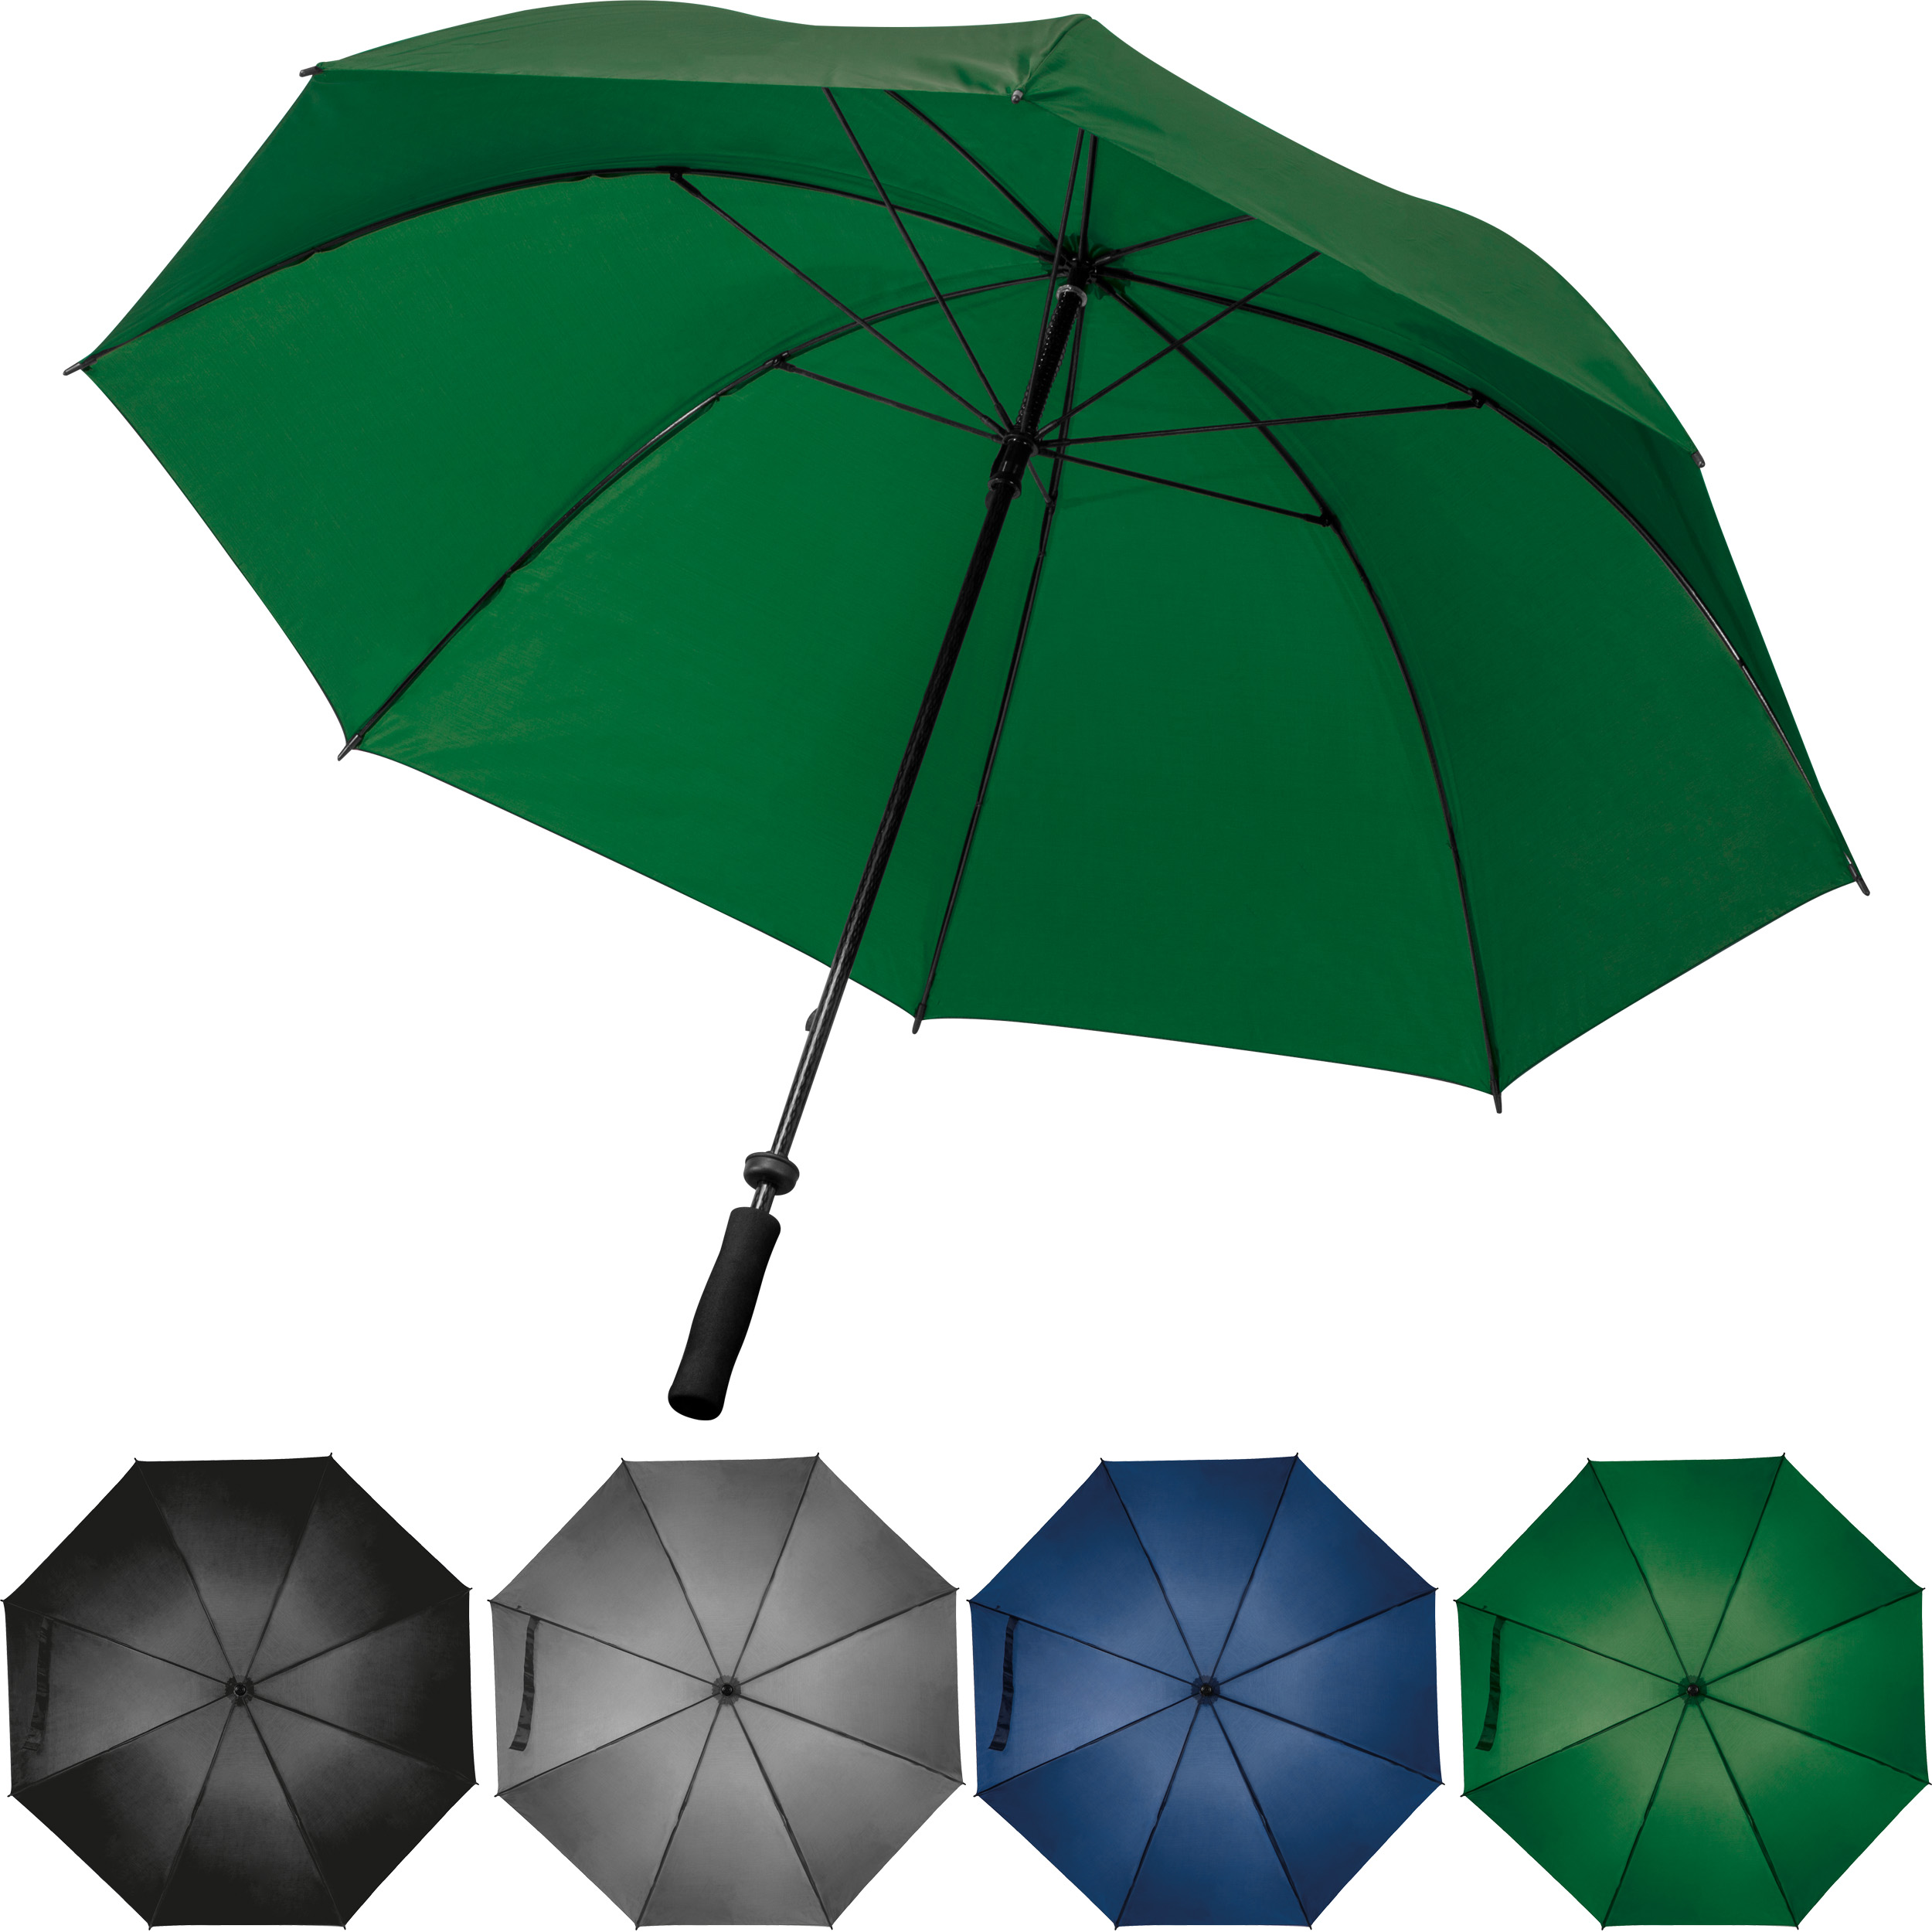 Large umbrella with soft grip.